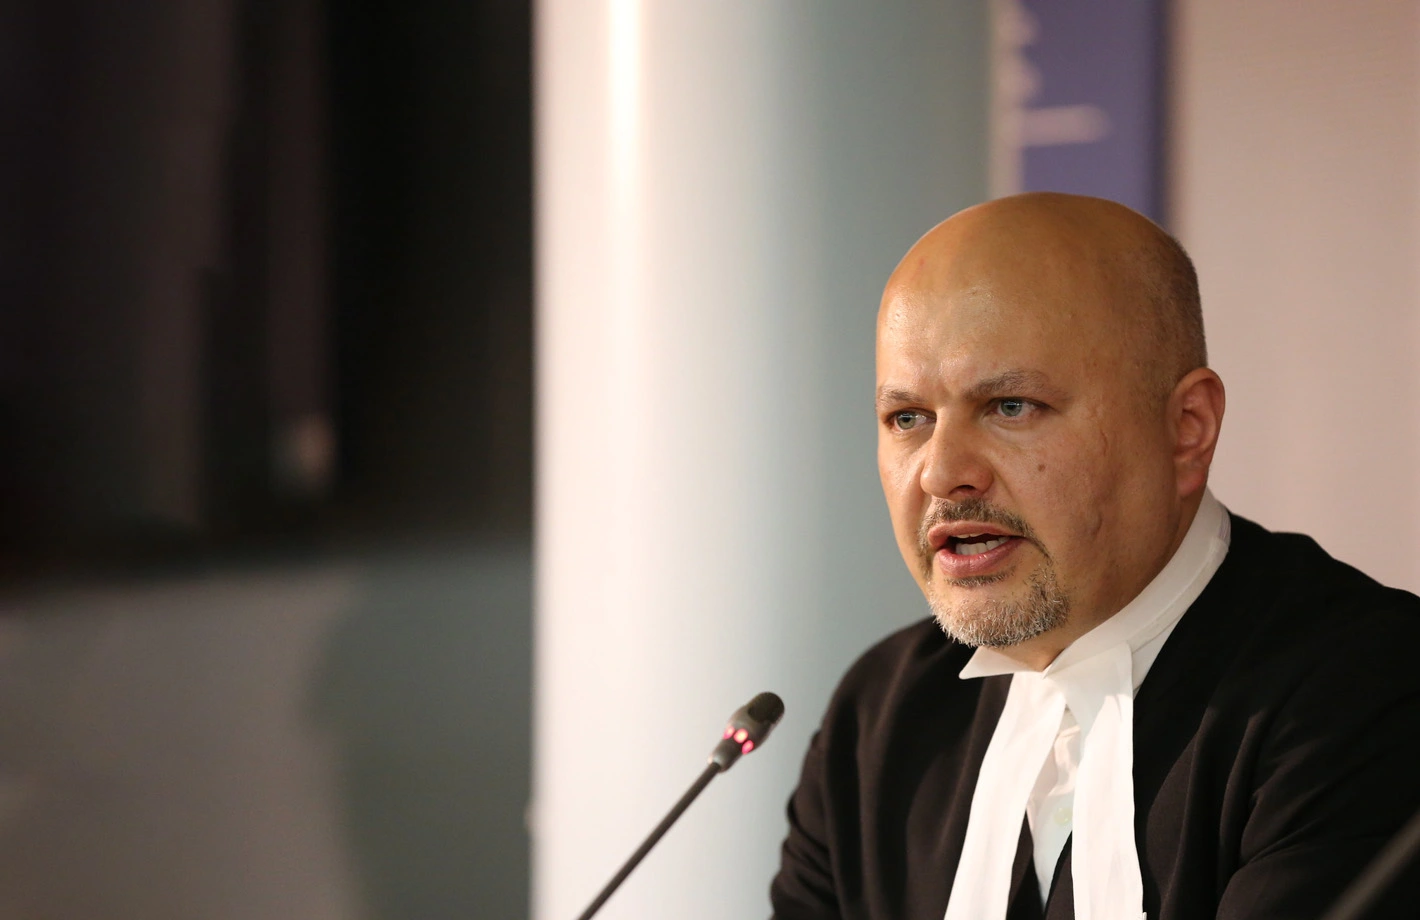 ICC Prosecutor Karim A. A. Khan KC speaking at a microphone